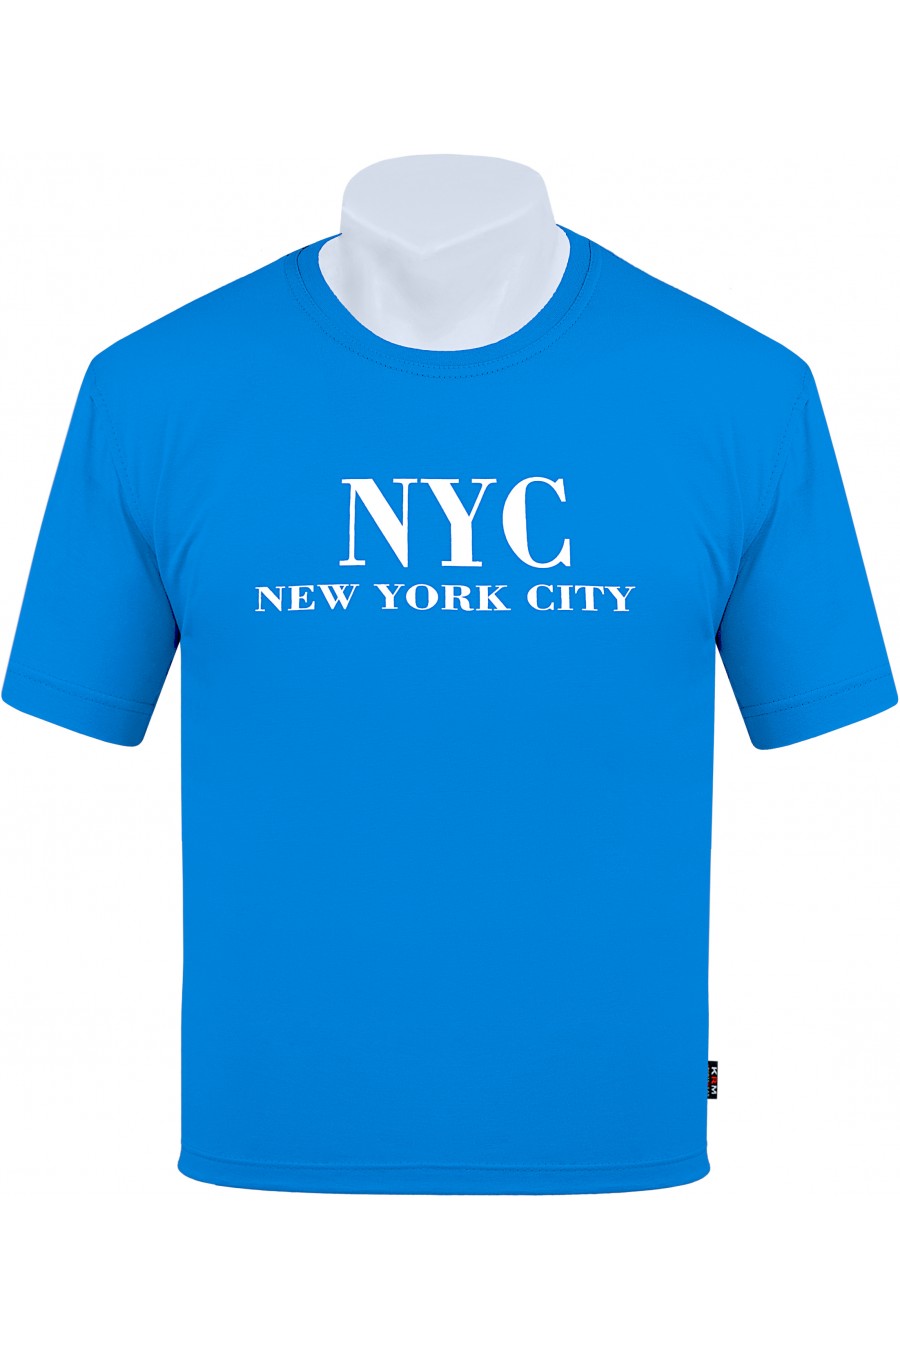 Koszulka NEW YORK CITY M-8XL bawełna turkus